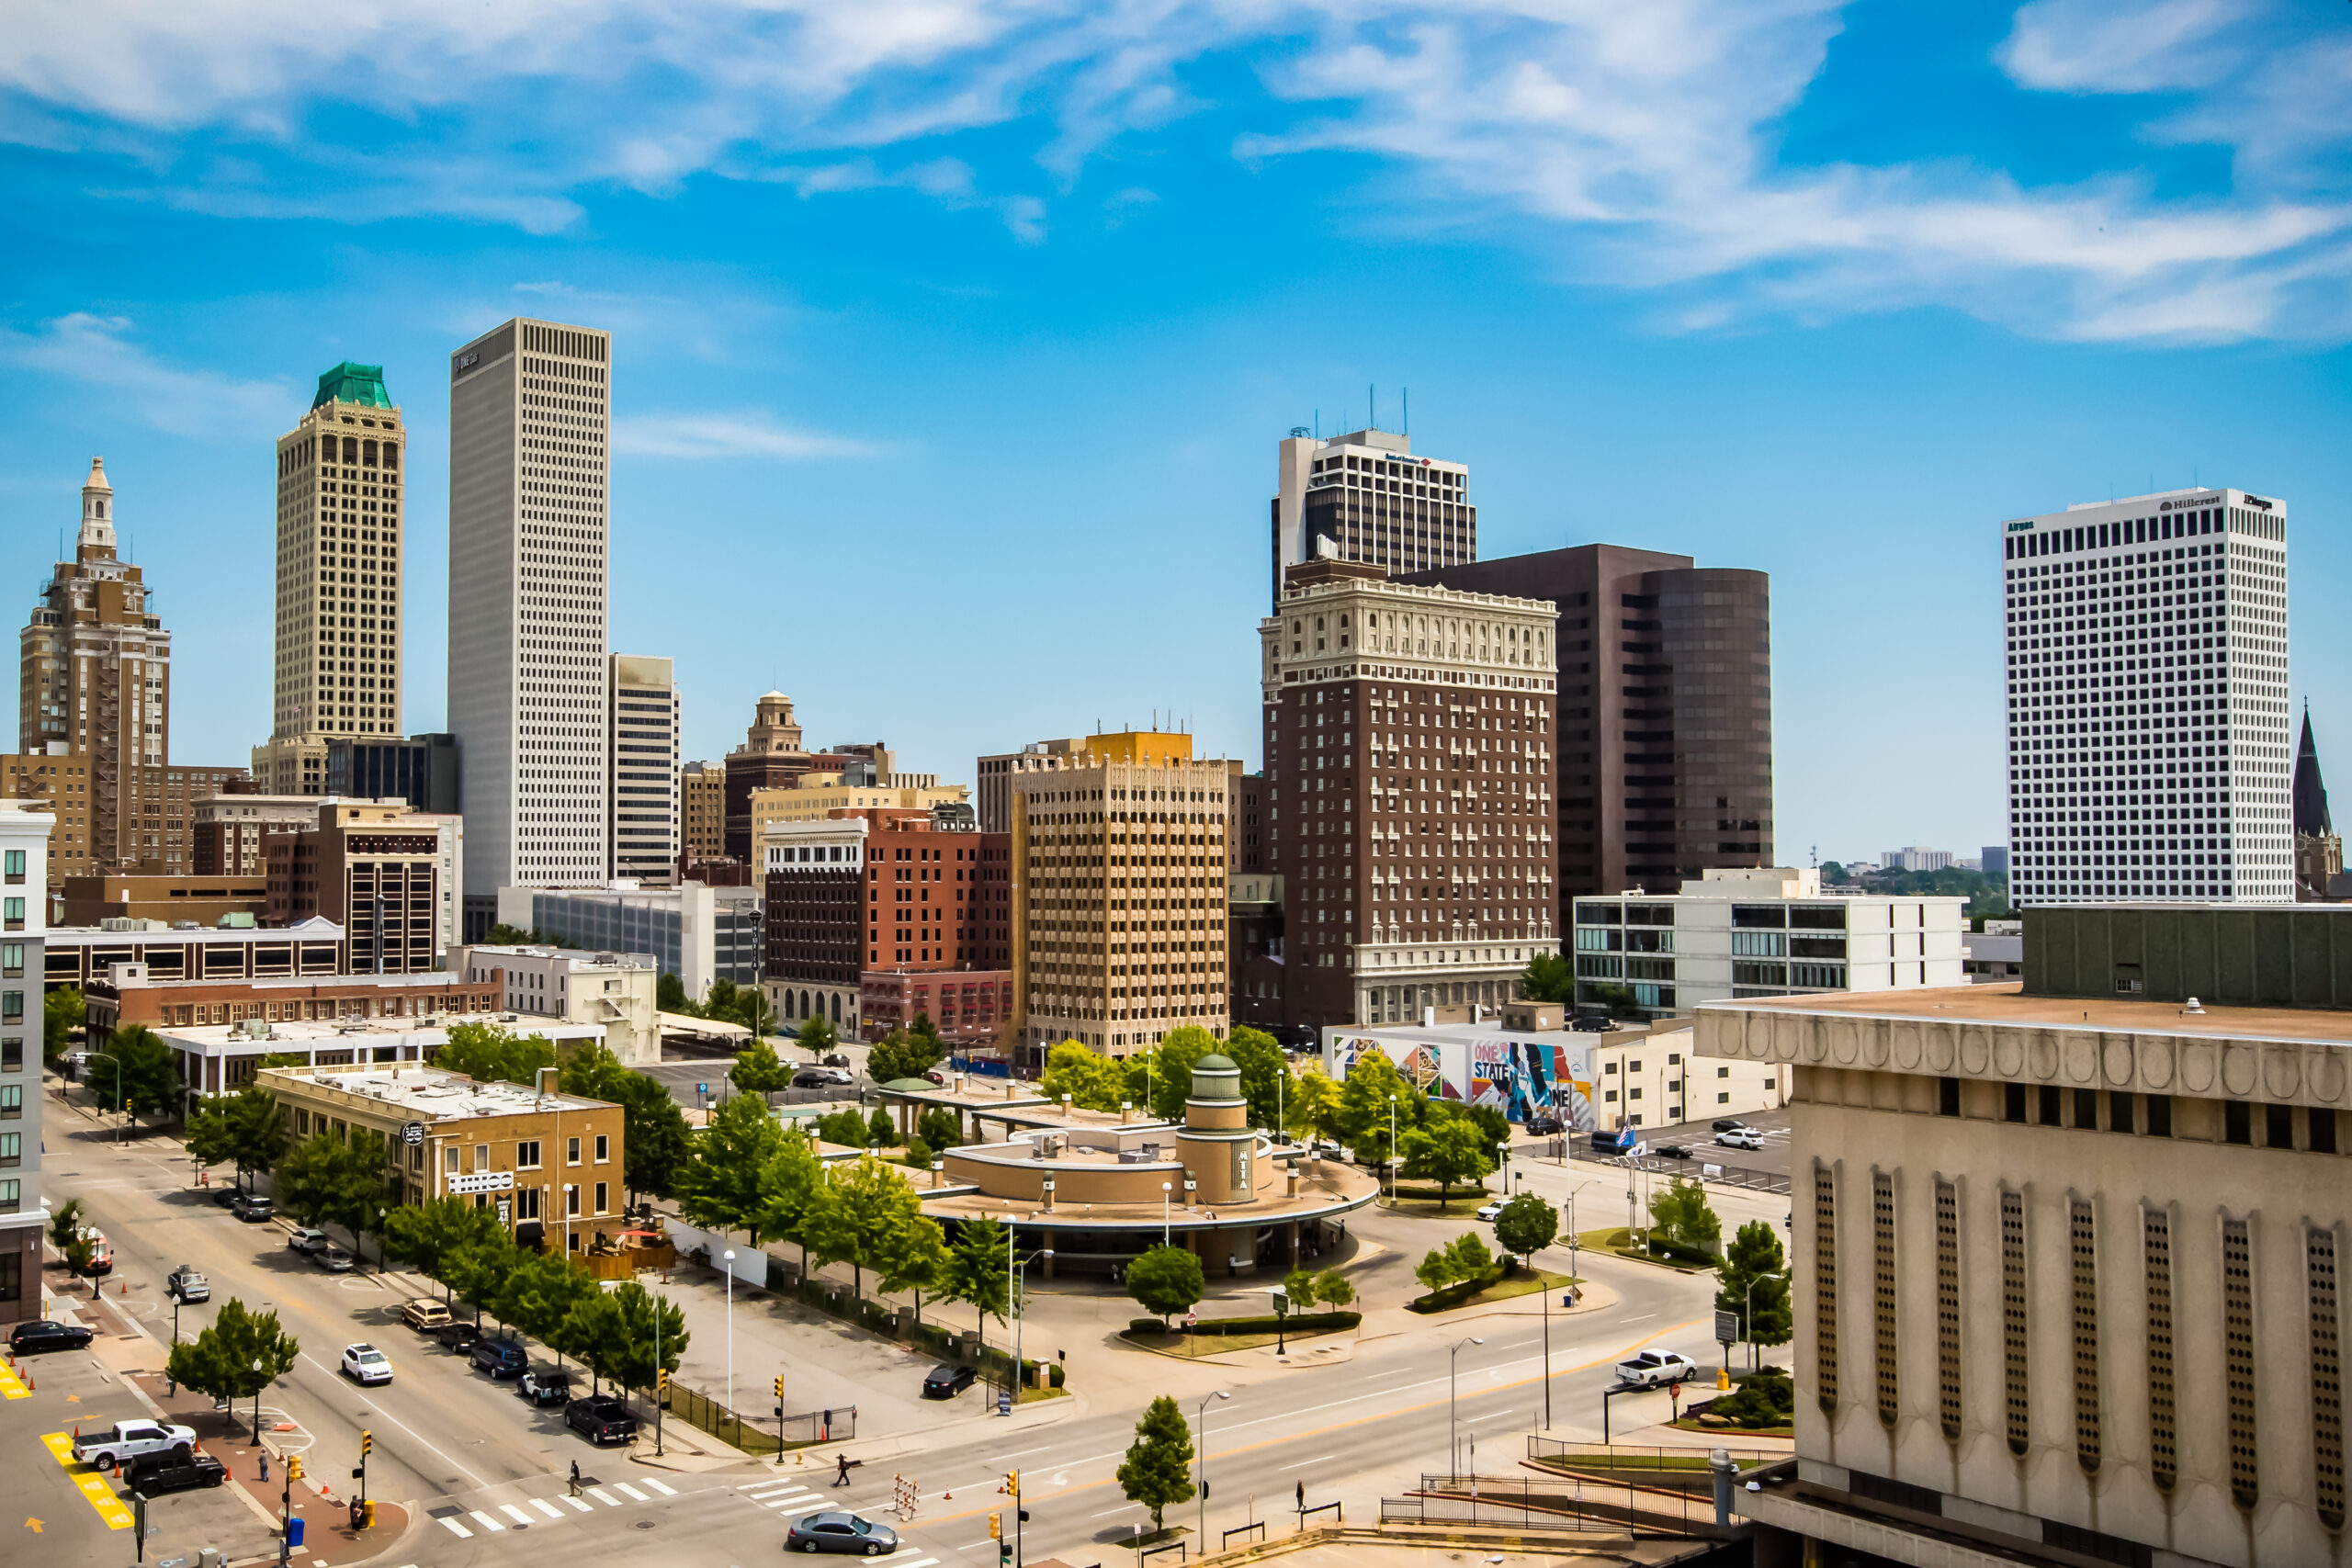 A skyline photograph of the city of Tulsa